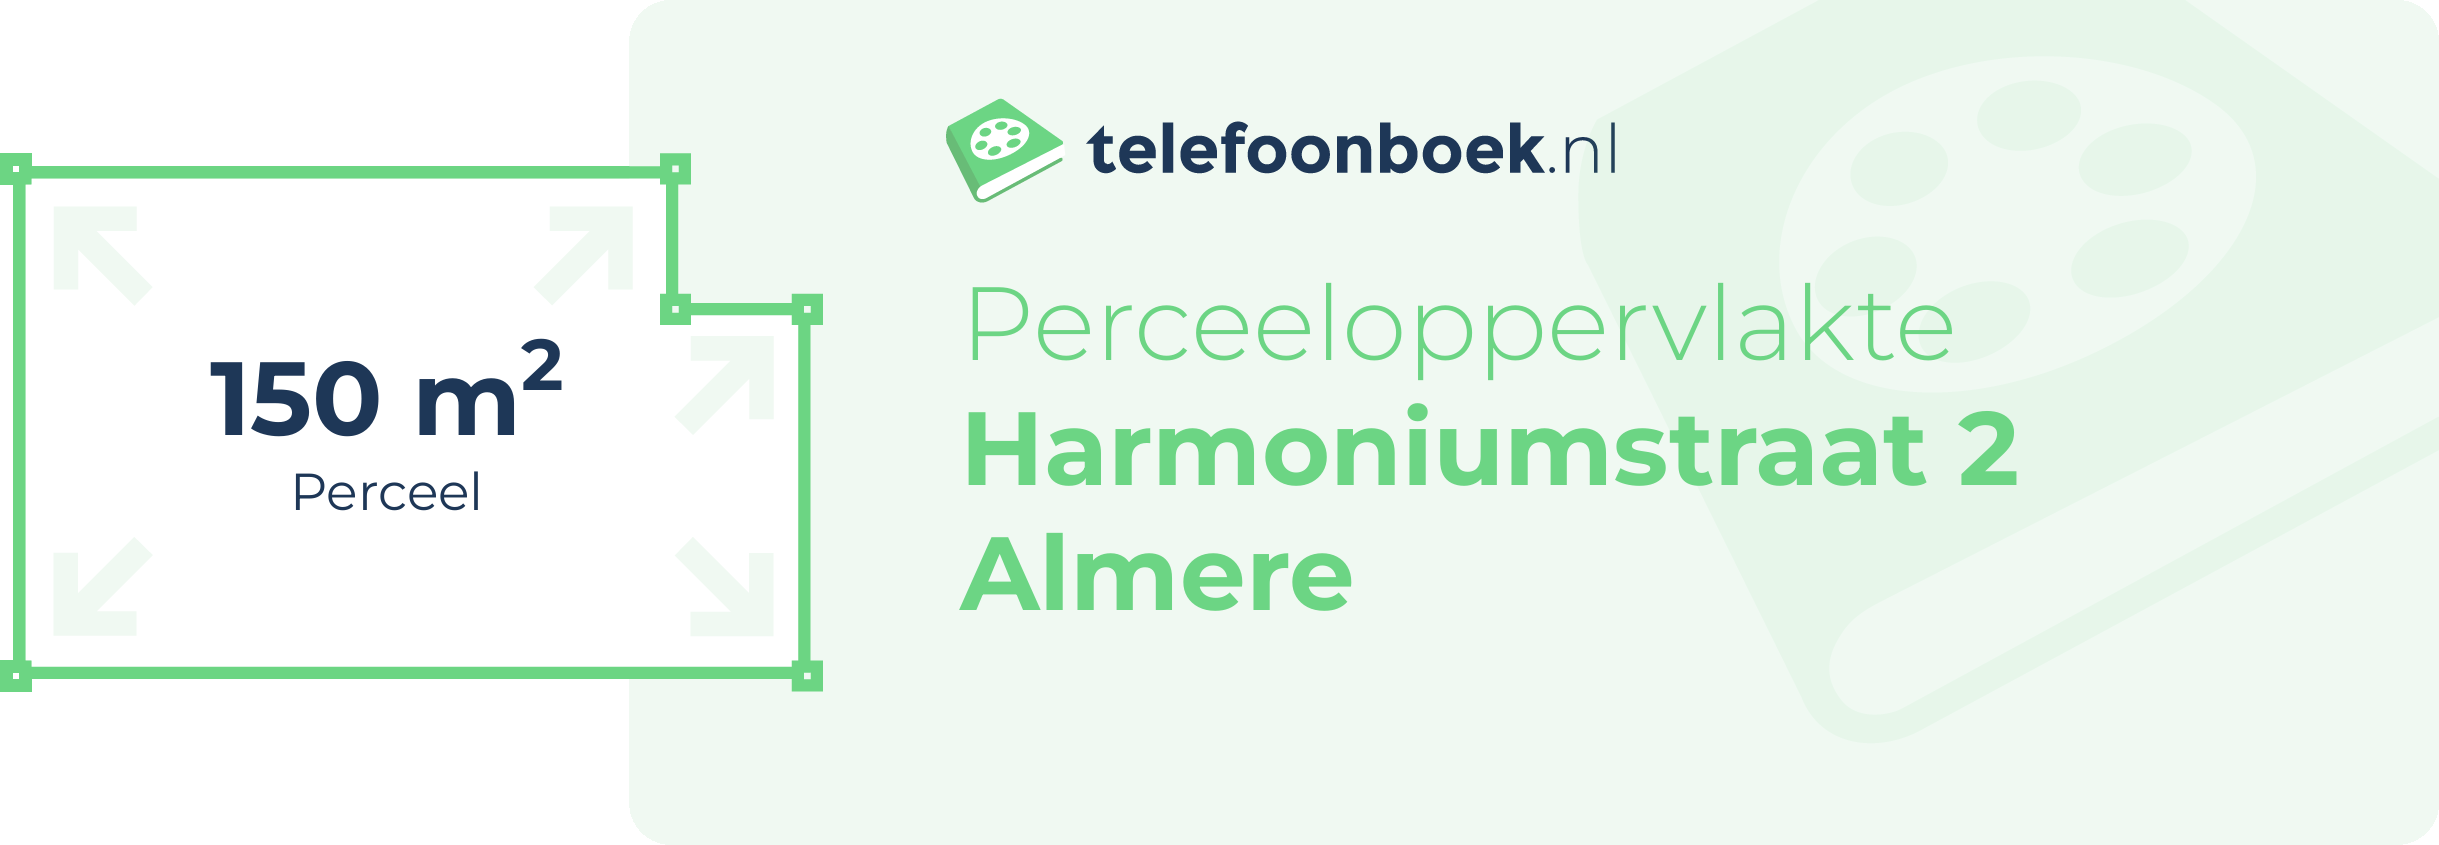 Perceeloppervlakte Harmoniumstraat 2 Almere